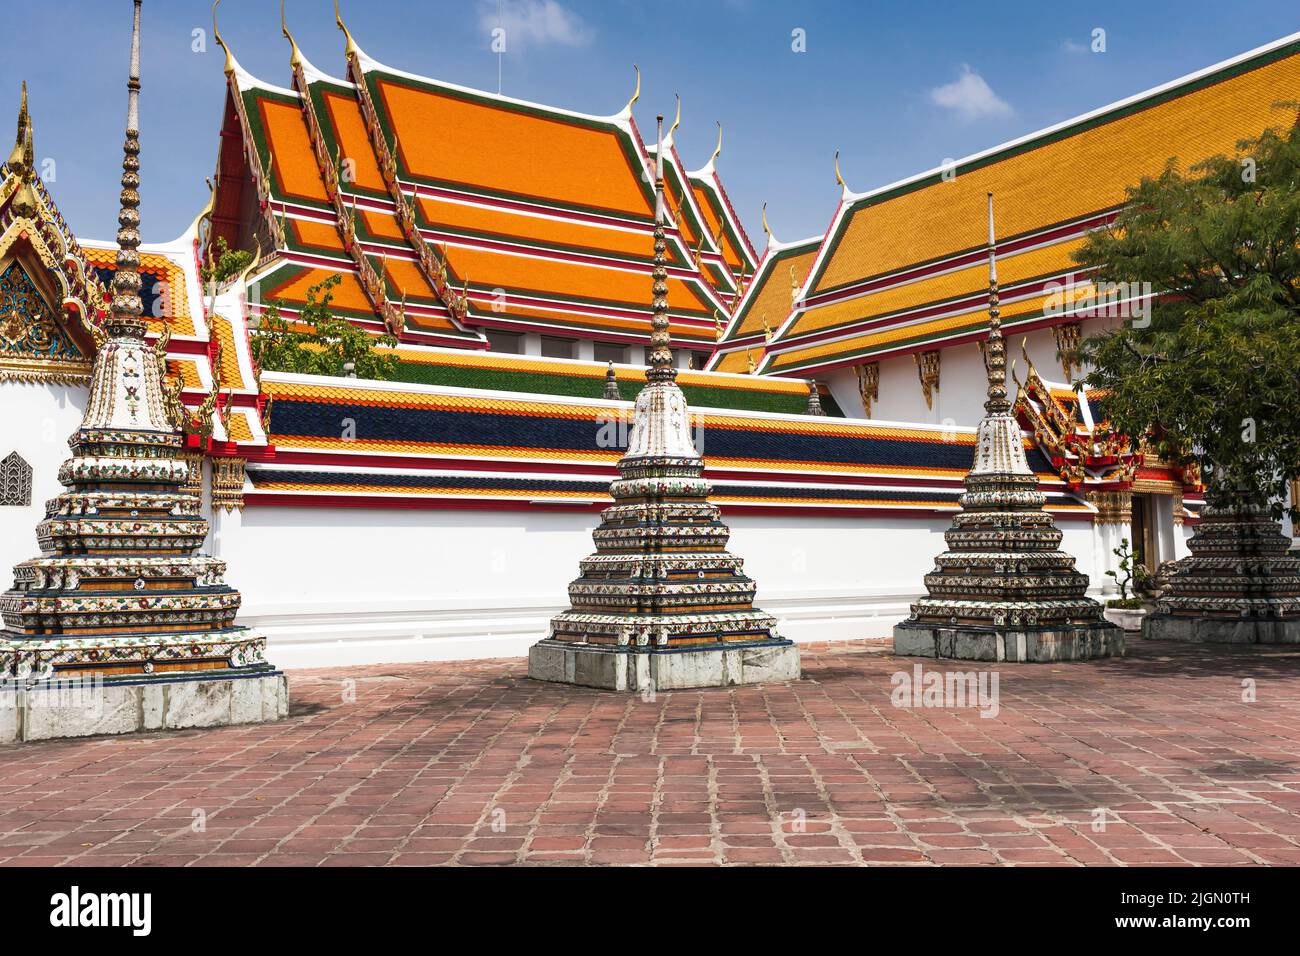 Rainbow Coloured String Background, Bangkok, Thailand Stock Photo, Picture  and Royalty Free Image. Image 23763146.